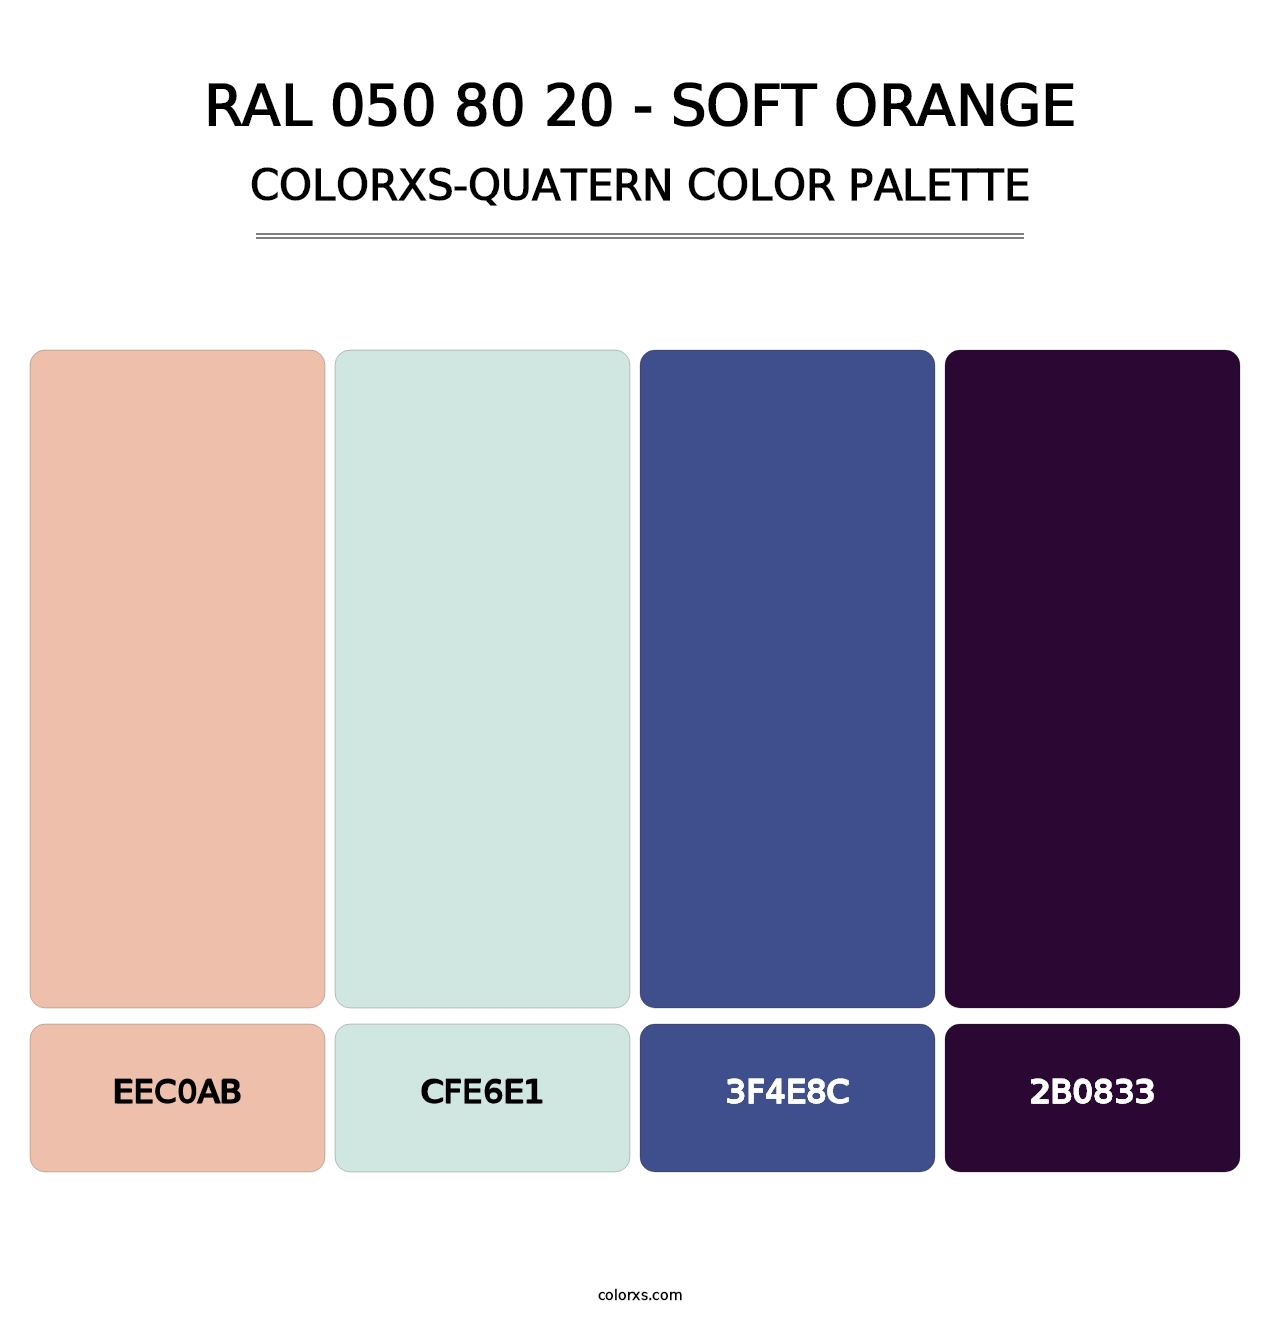 RAL 050 80 20 - Soft Orange - Colorxs Quatern Palette